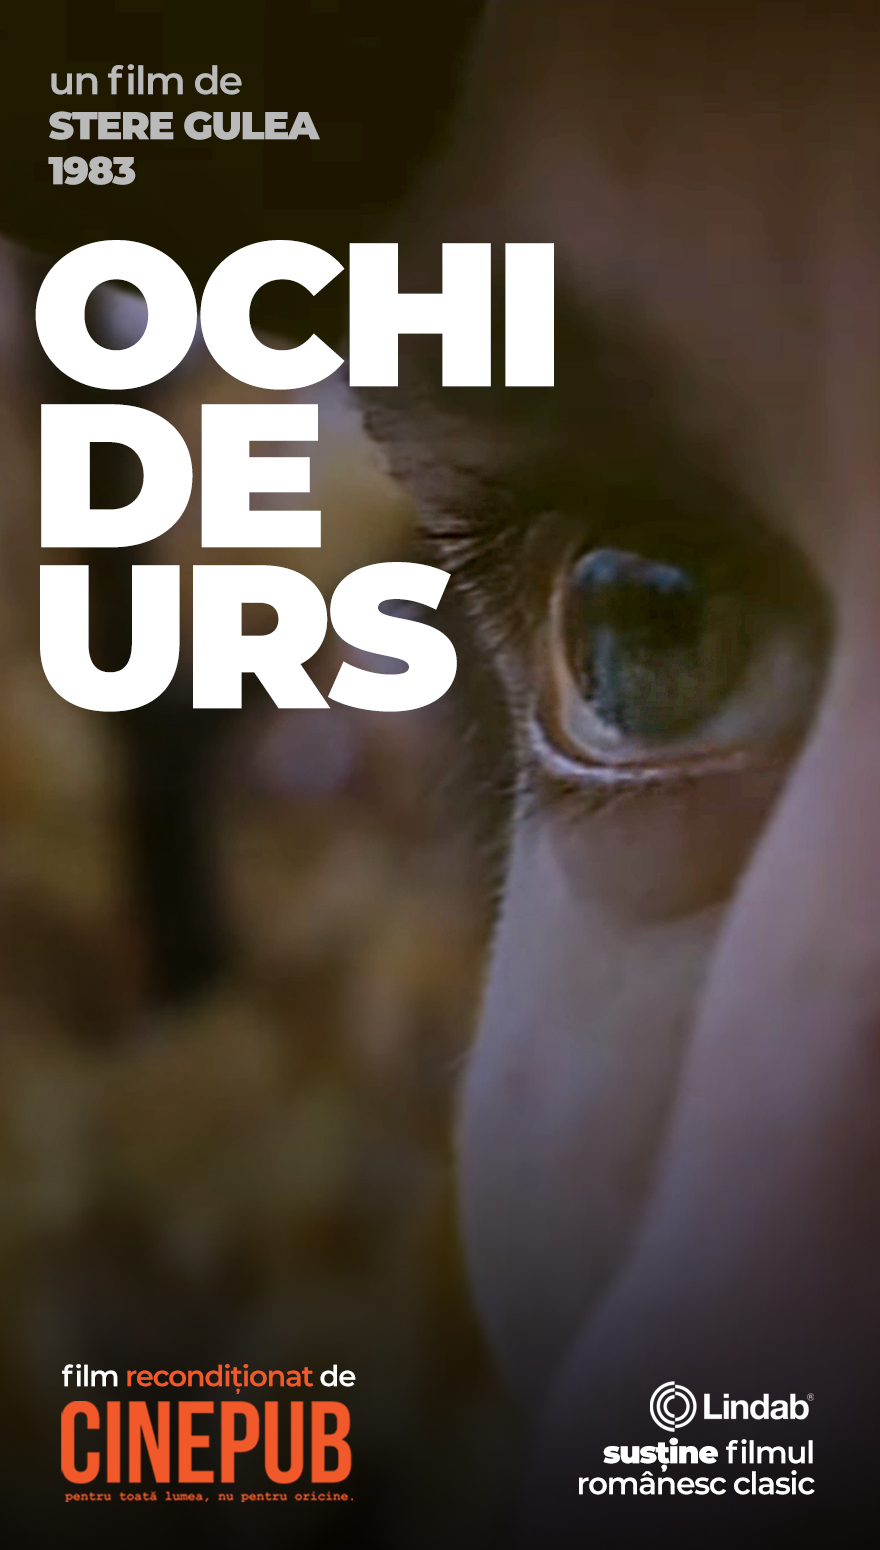 Ochi de urs - film online reconditinat fullHD - CINEPUB